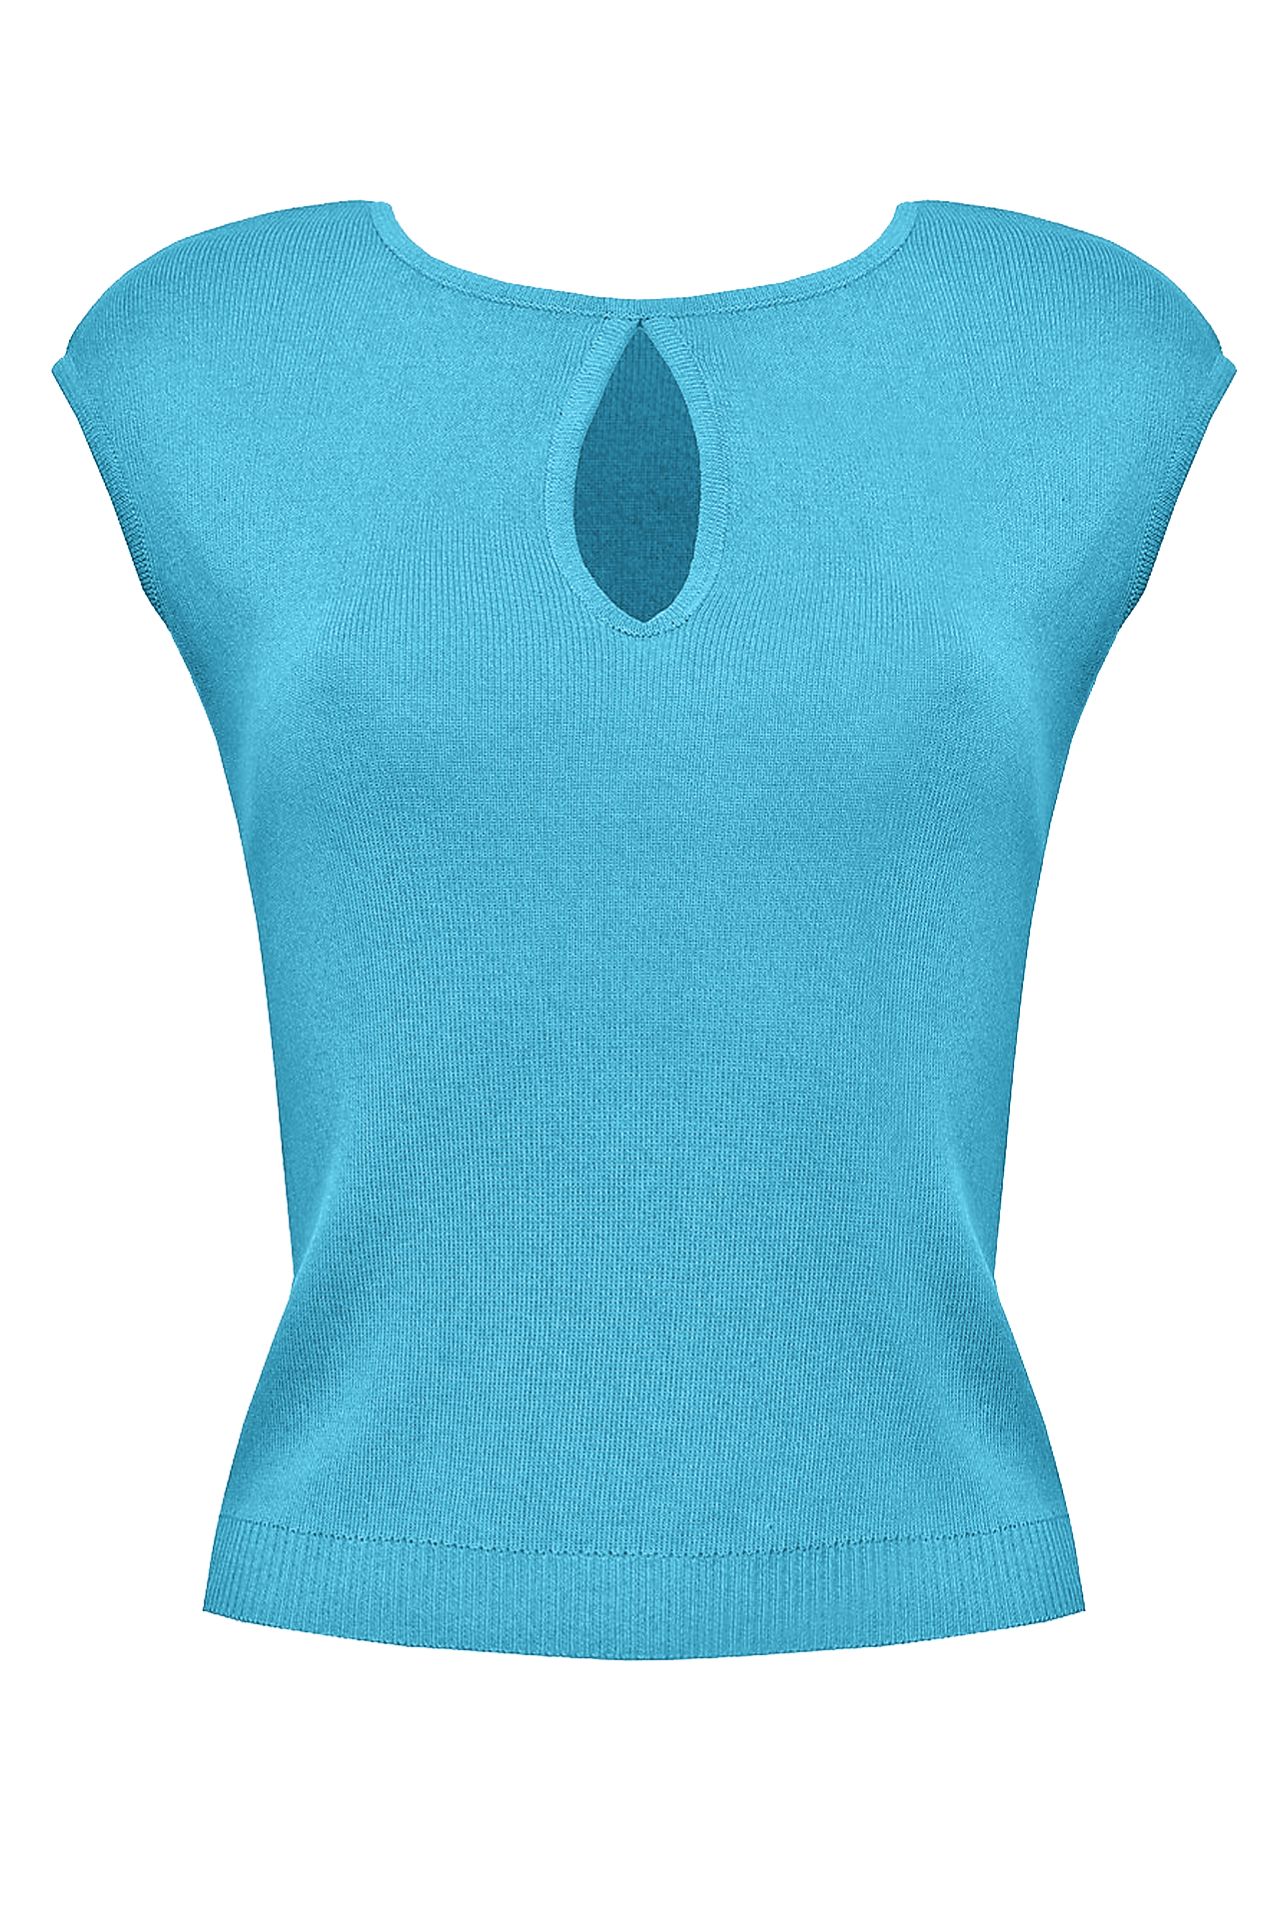 Одежда женская Топ TENAX by SILVIA GETTI (MG011/14.2). Купить за 4130 руб.